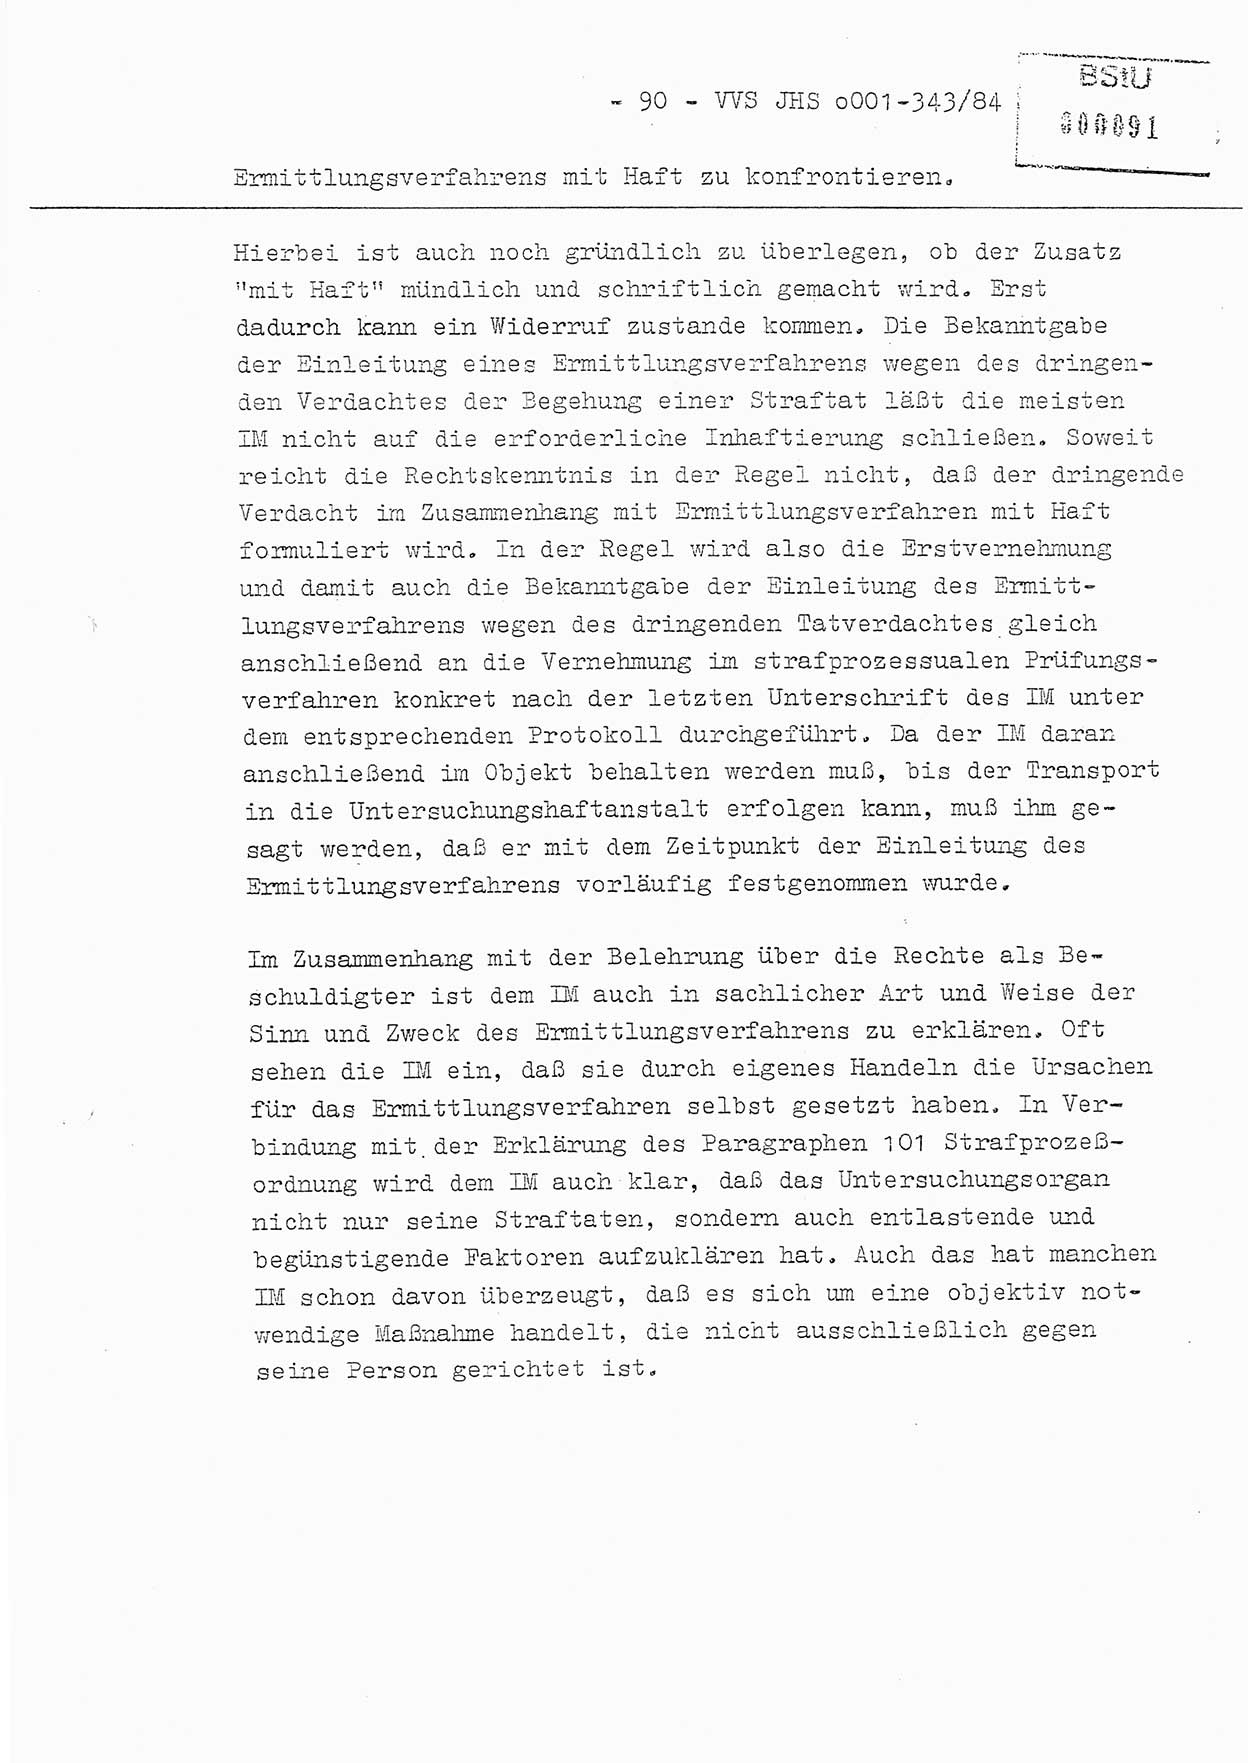 Diplomarbeit, Oberleutnant Bernd Michael (HA Ⅸ/5), Oberleutnant Peter Felber (HA IX/5), Ministerium für Staatssicherheit (MfS) [Deutsche Demokratische Republik (DDR)], Juristische Hochschule (JHS), Vertrauliche Verschlußsache (VVS) o001-343/84, Potsdam 1985, Seite 90 (Dipl.-Arb. MfS DDR JHS VVS o001-343/84 1985, S. 90)